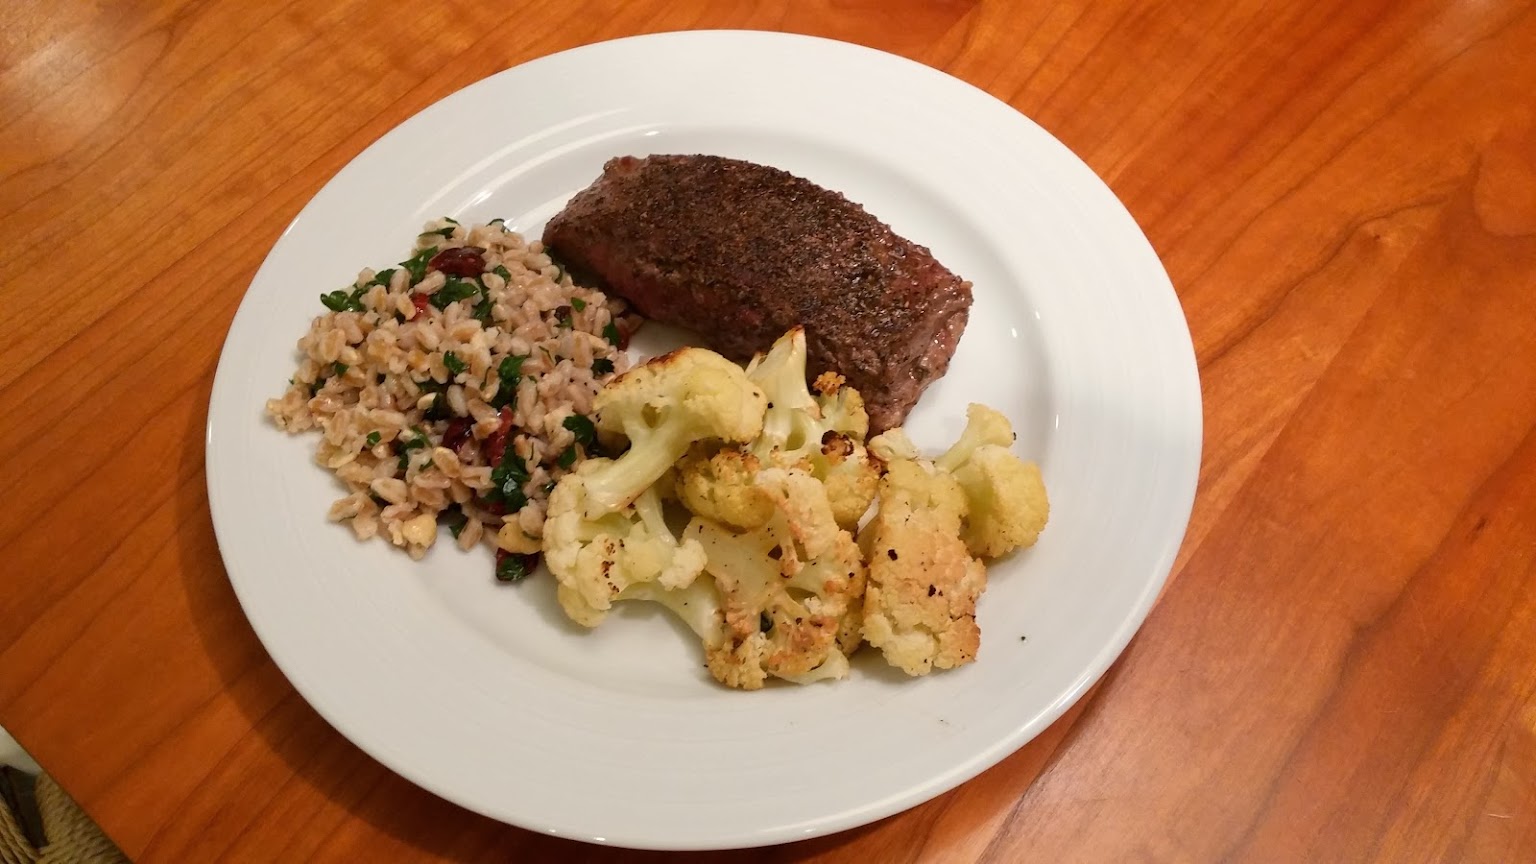 PeachDish flat iron steak with farro salad and cauliflower